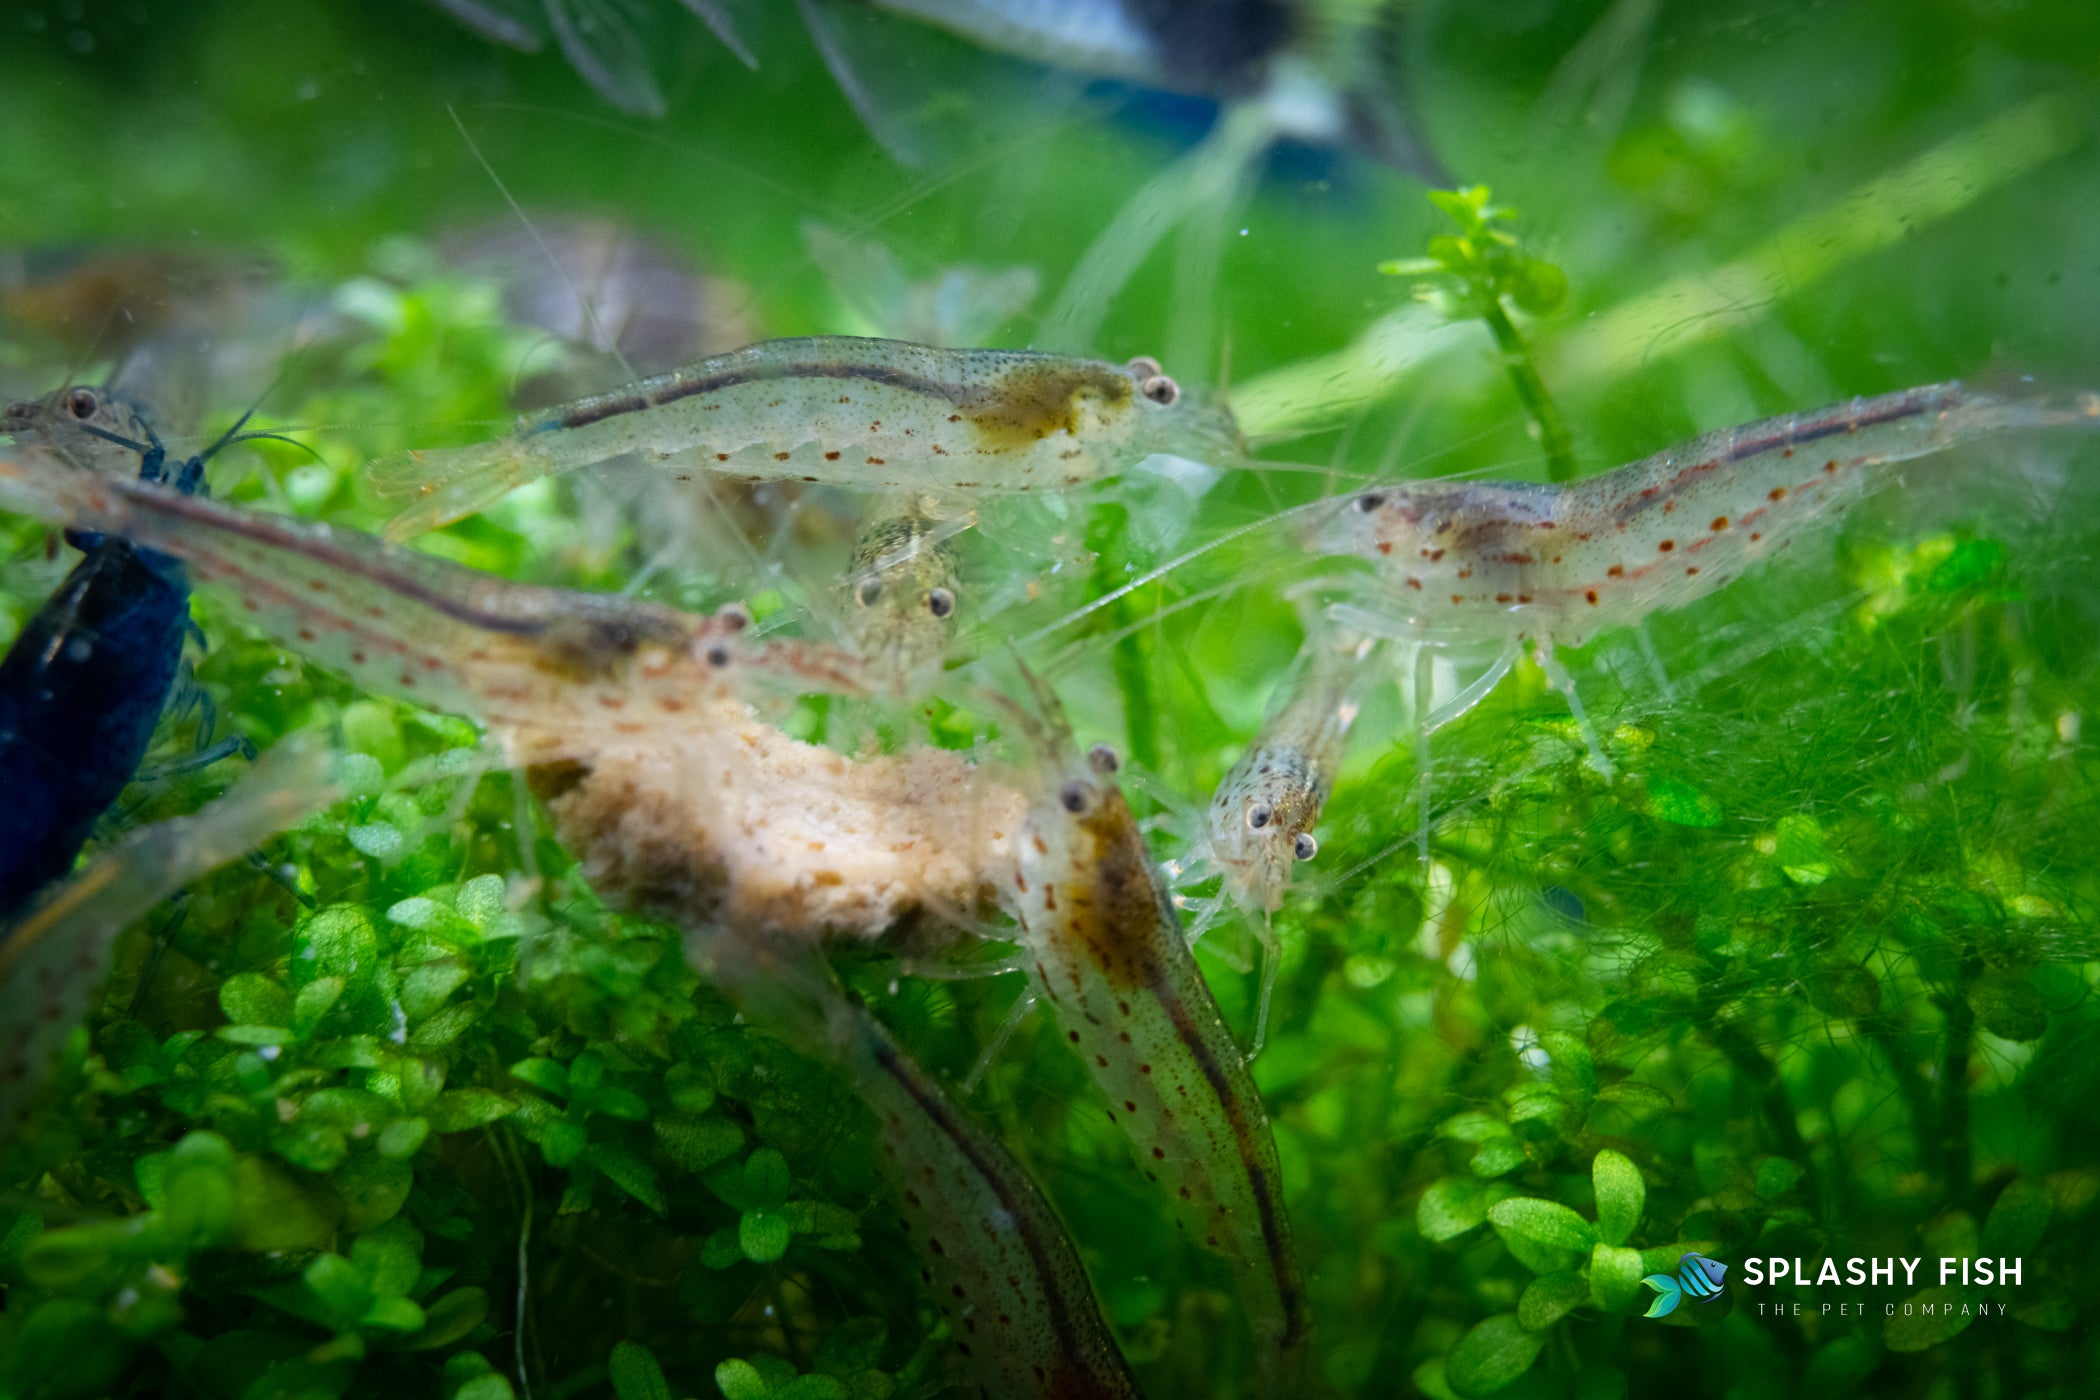 A group of amano shrimp eat algae pallets